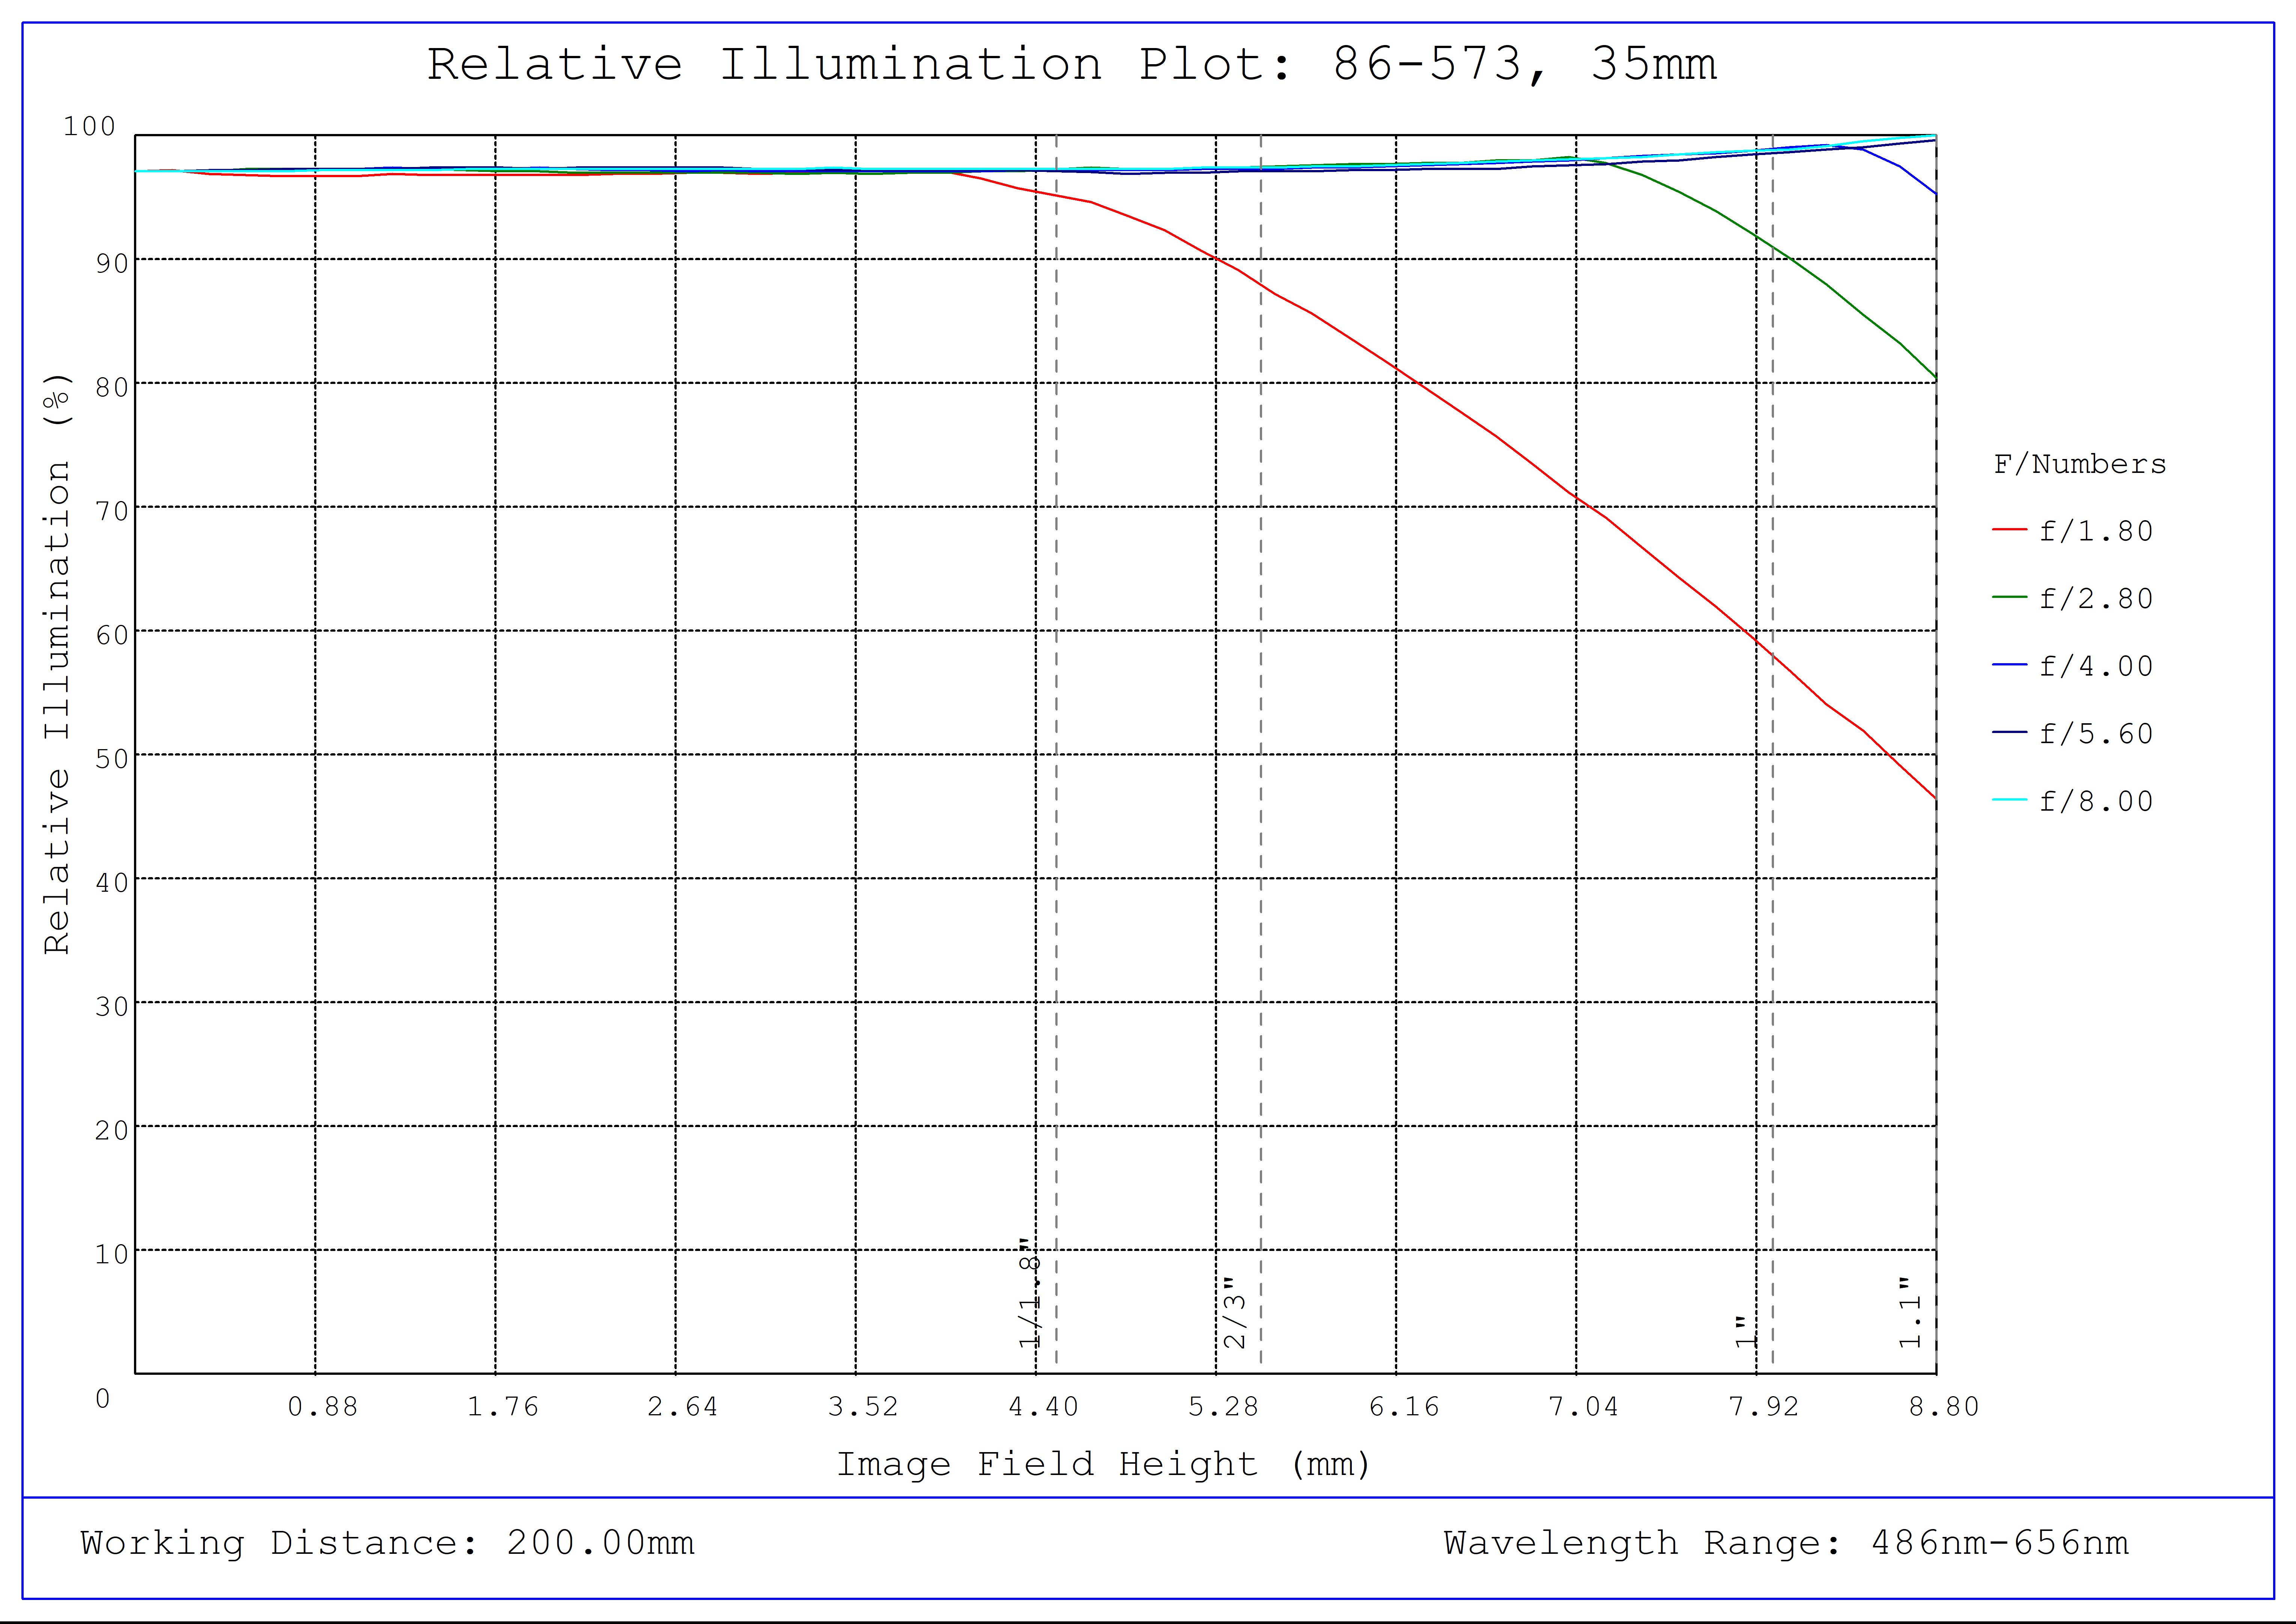 #86-573, 35mm Focal Length, HP Series Fixed Focal Length Lens, Relative Illumination Plot